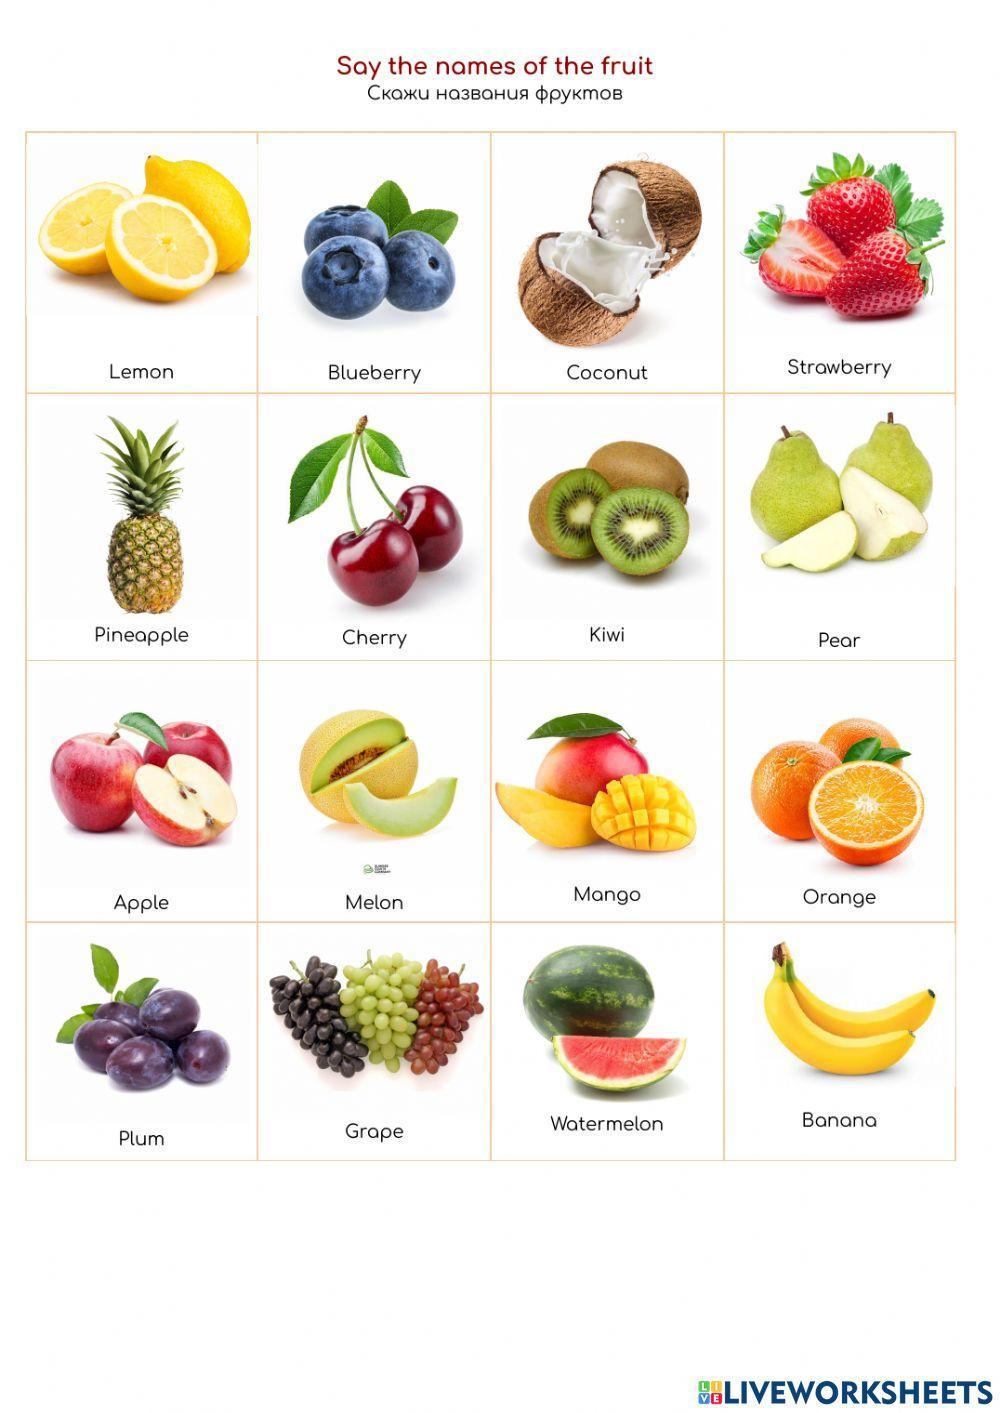 Fruit names